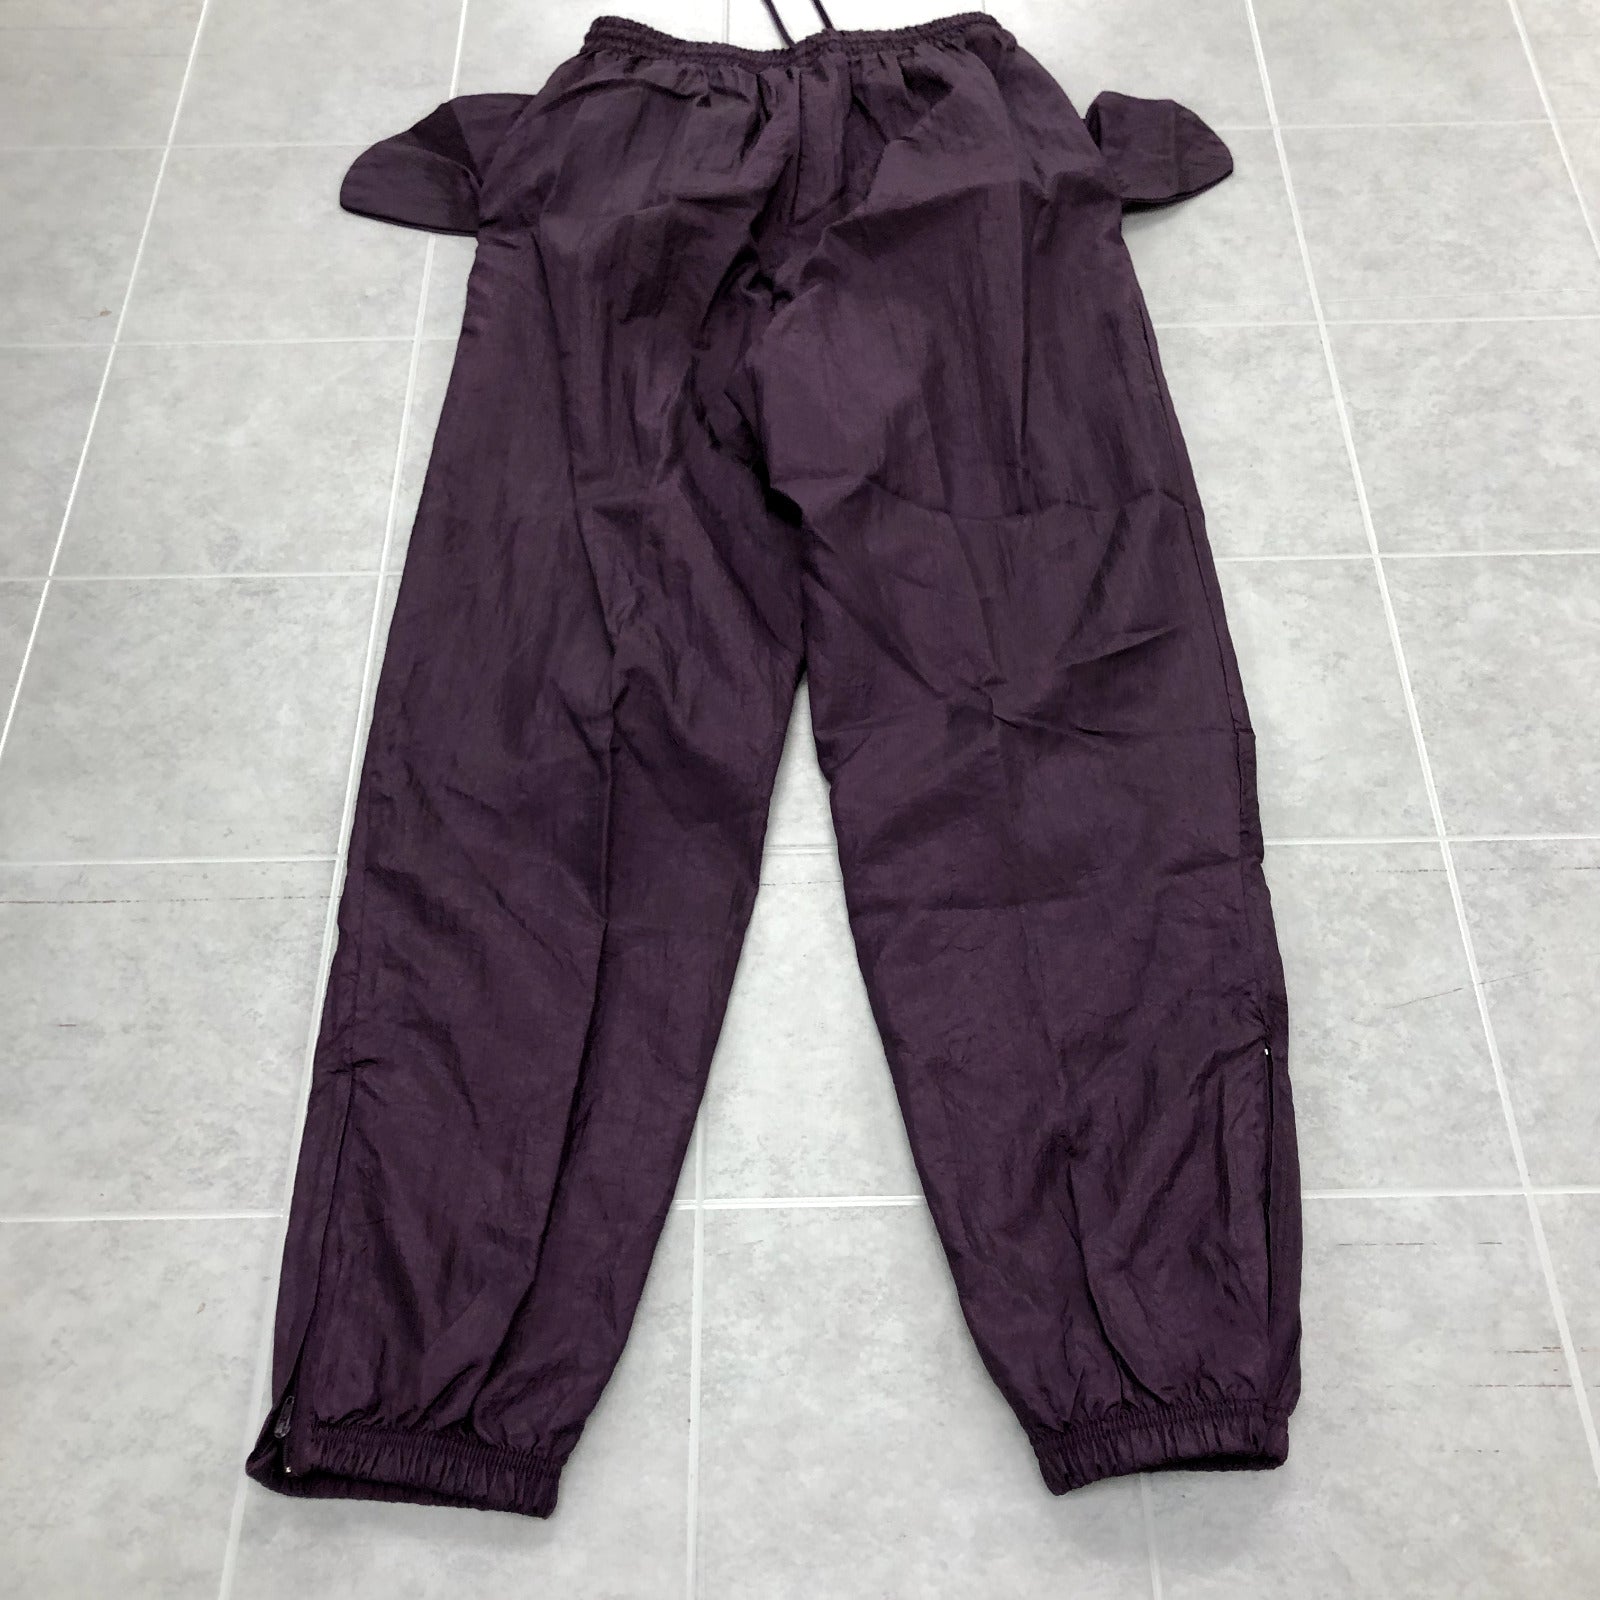 Vintage Athletech Purple Elastic Drawstring Waist Lined Track Pants Adult Size M